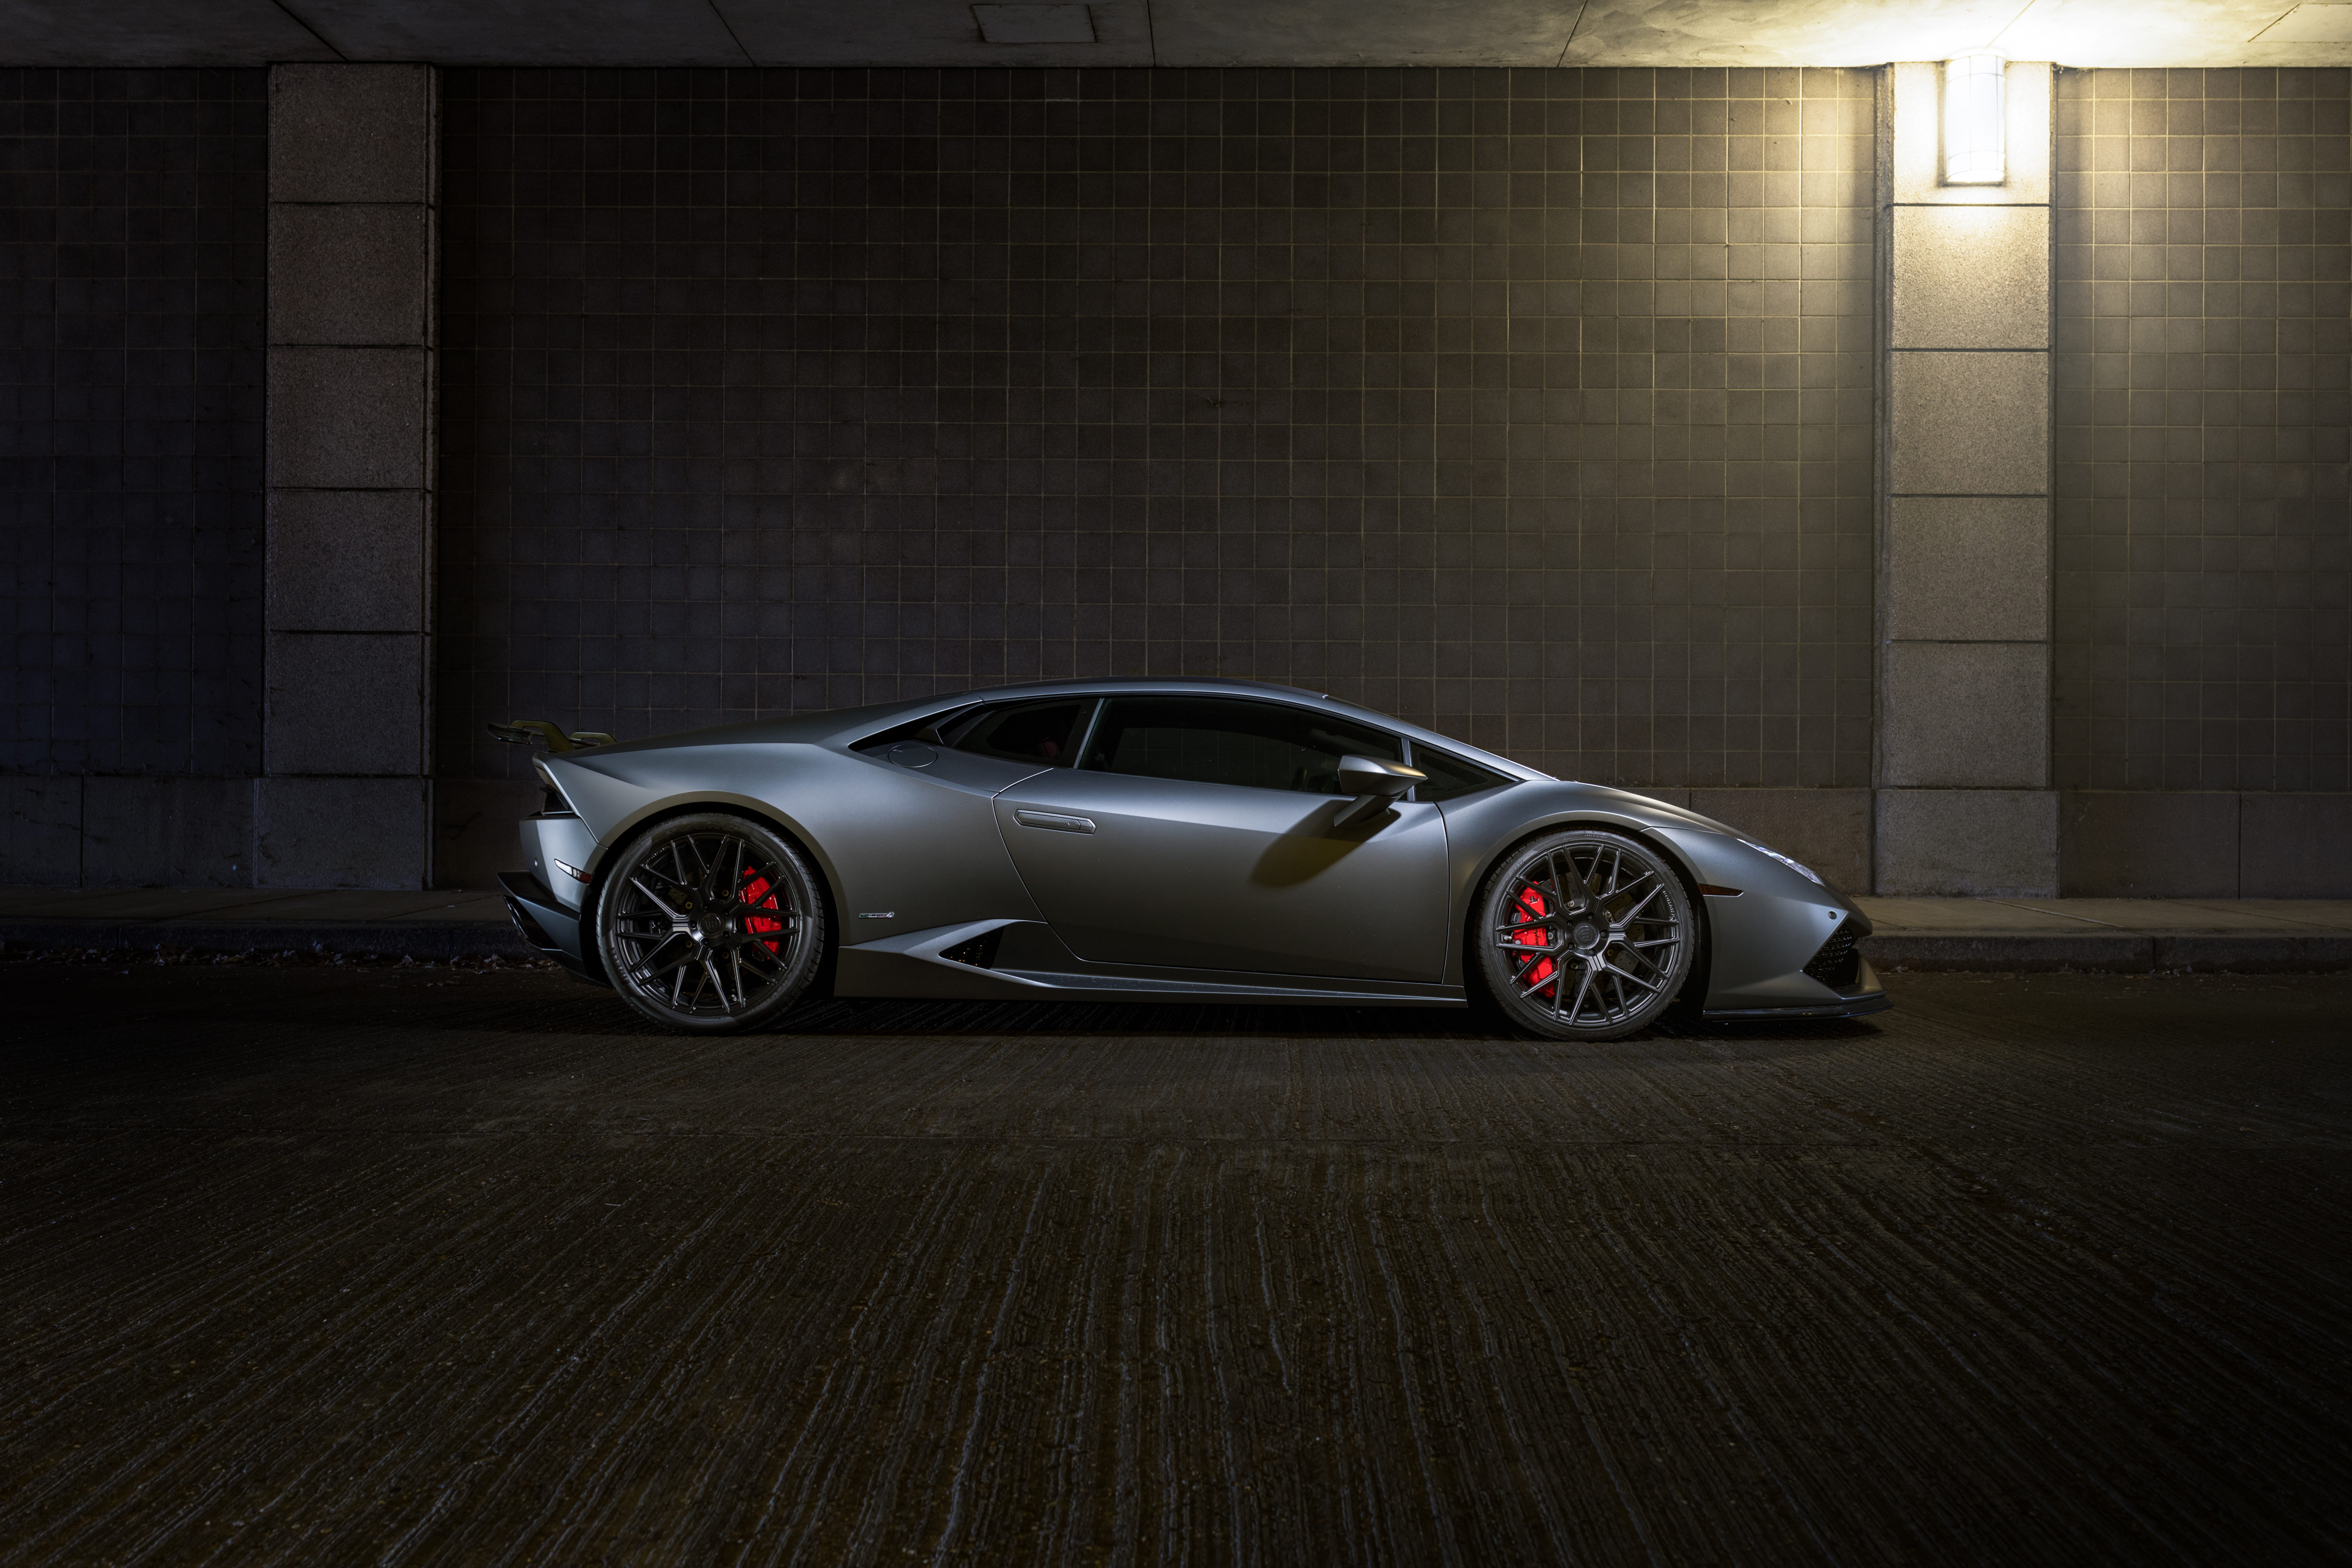 Lamborghini Huracan Matte Black Wallpaper If Youre Looking For The